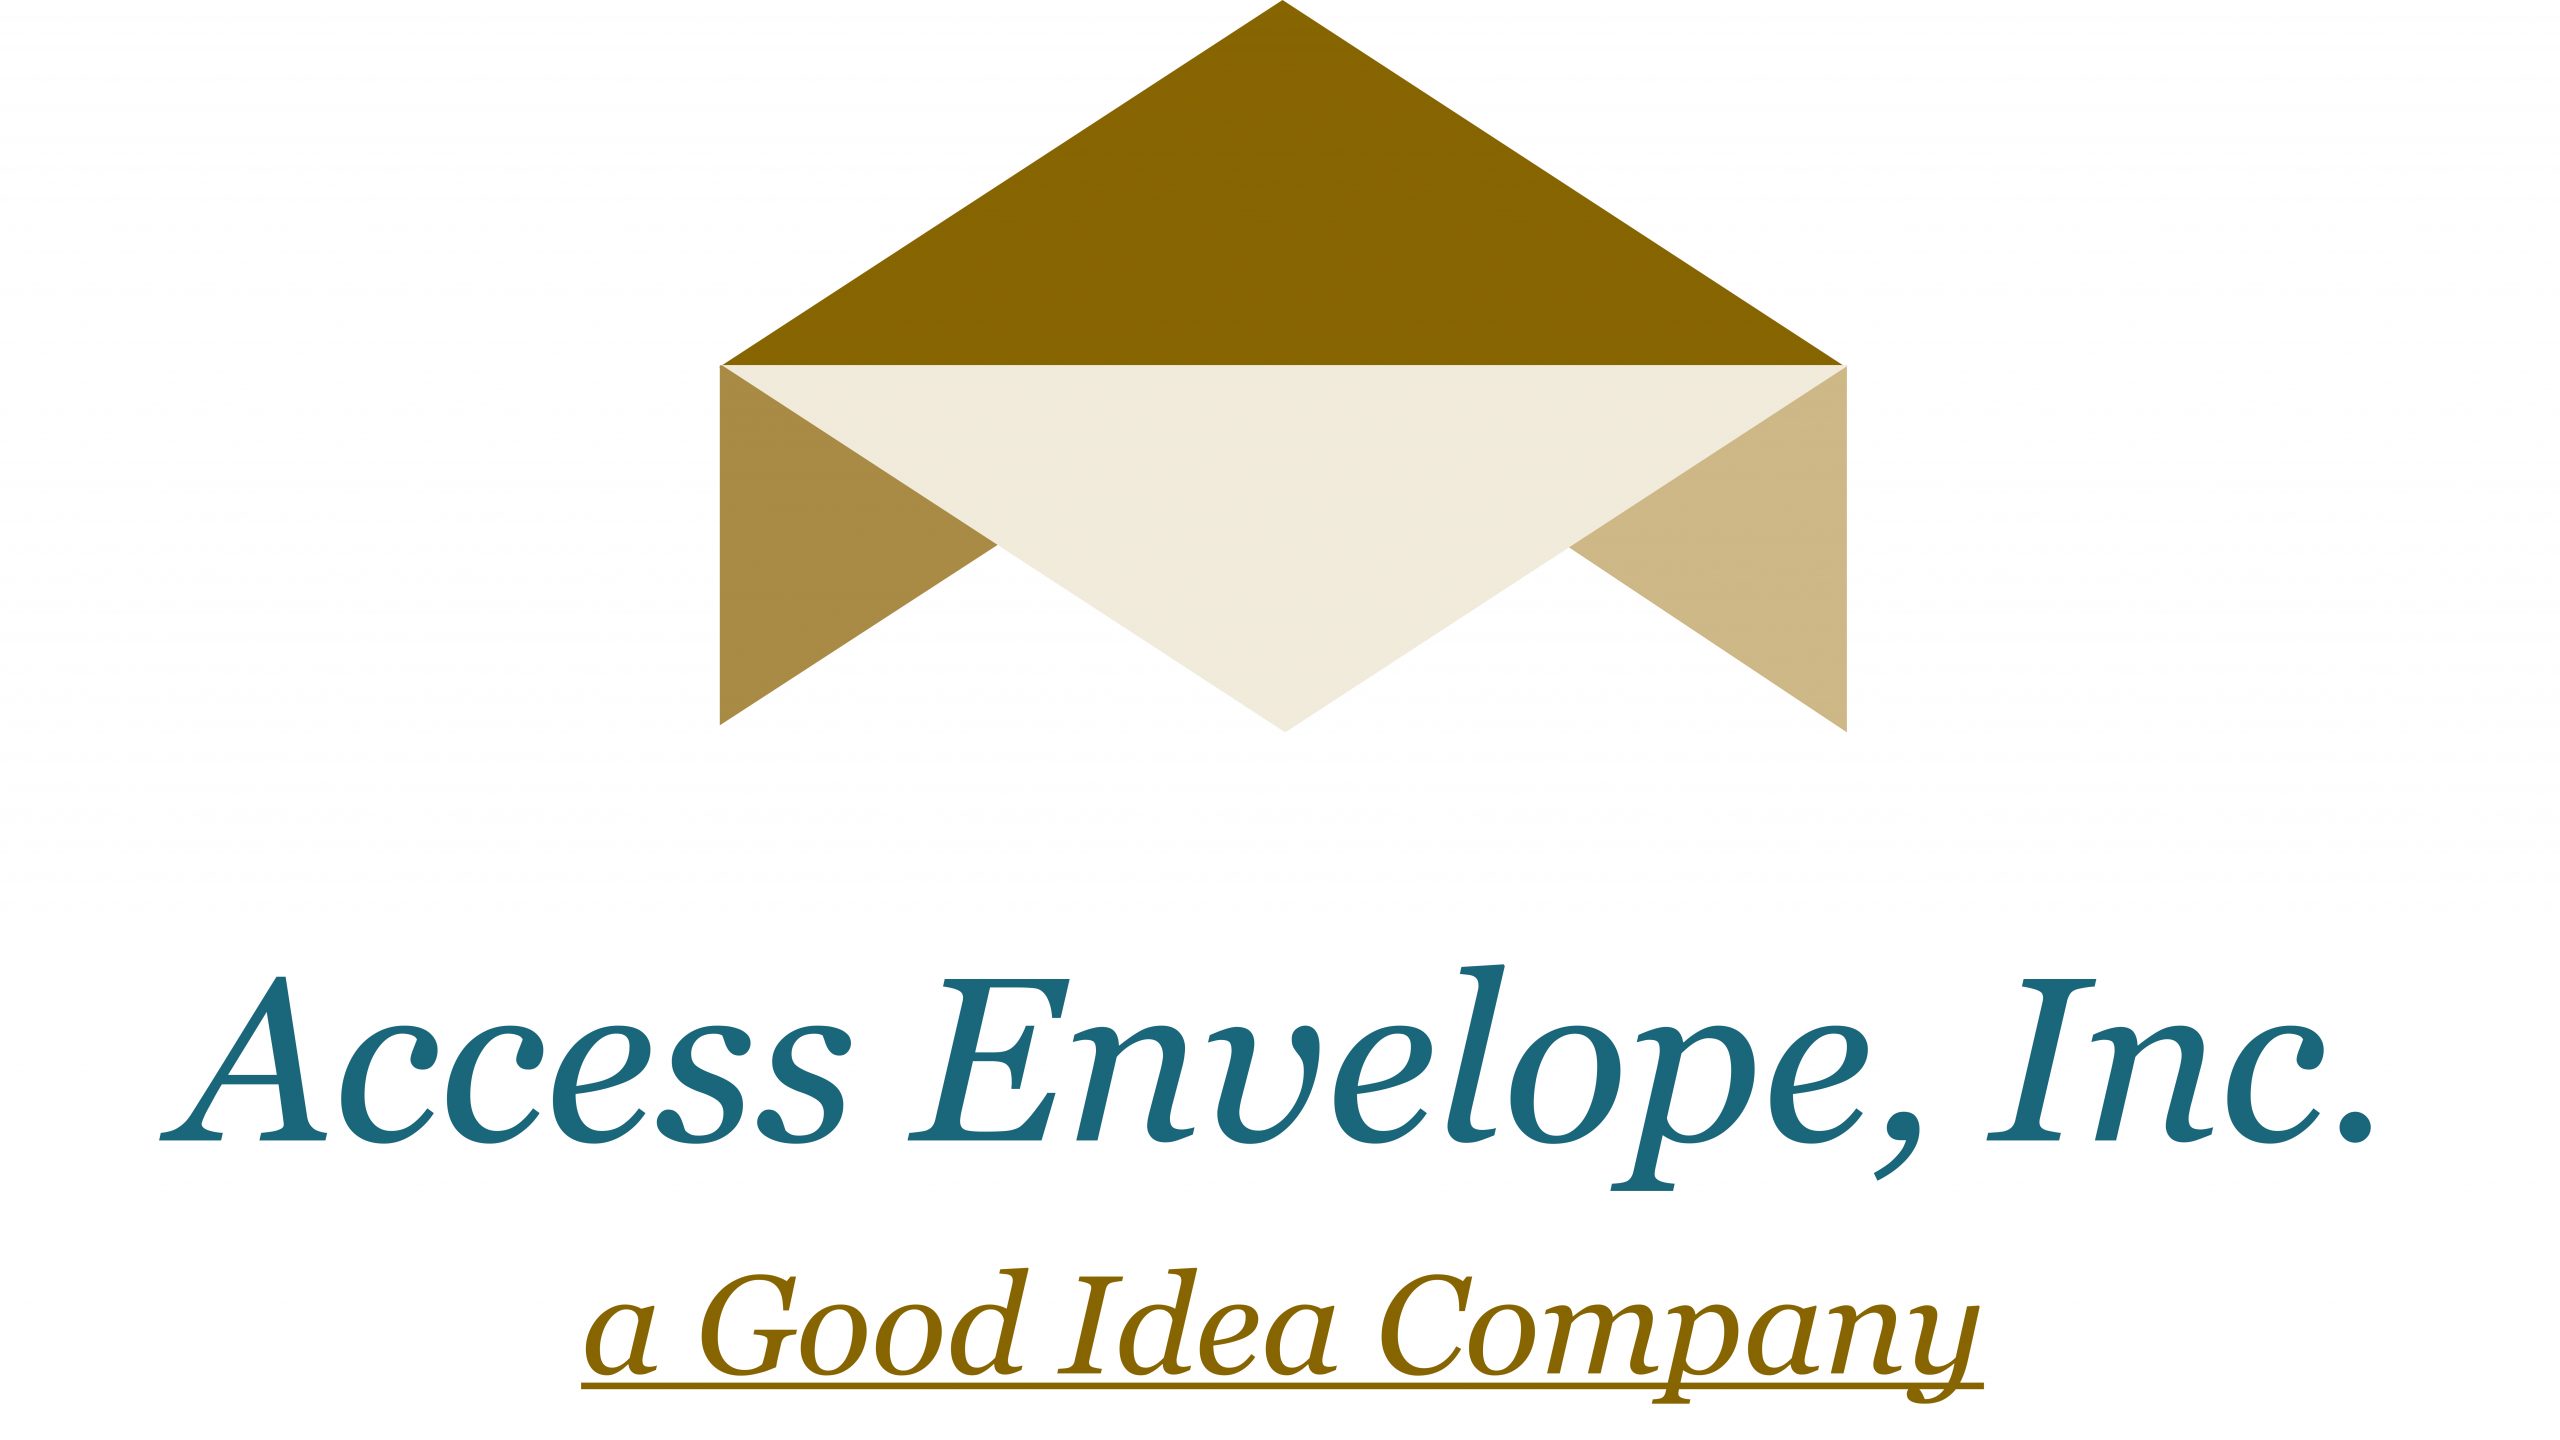 Access Envelope